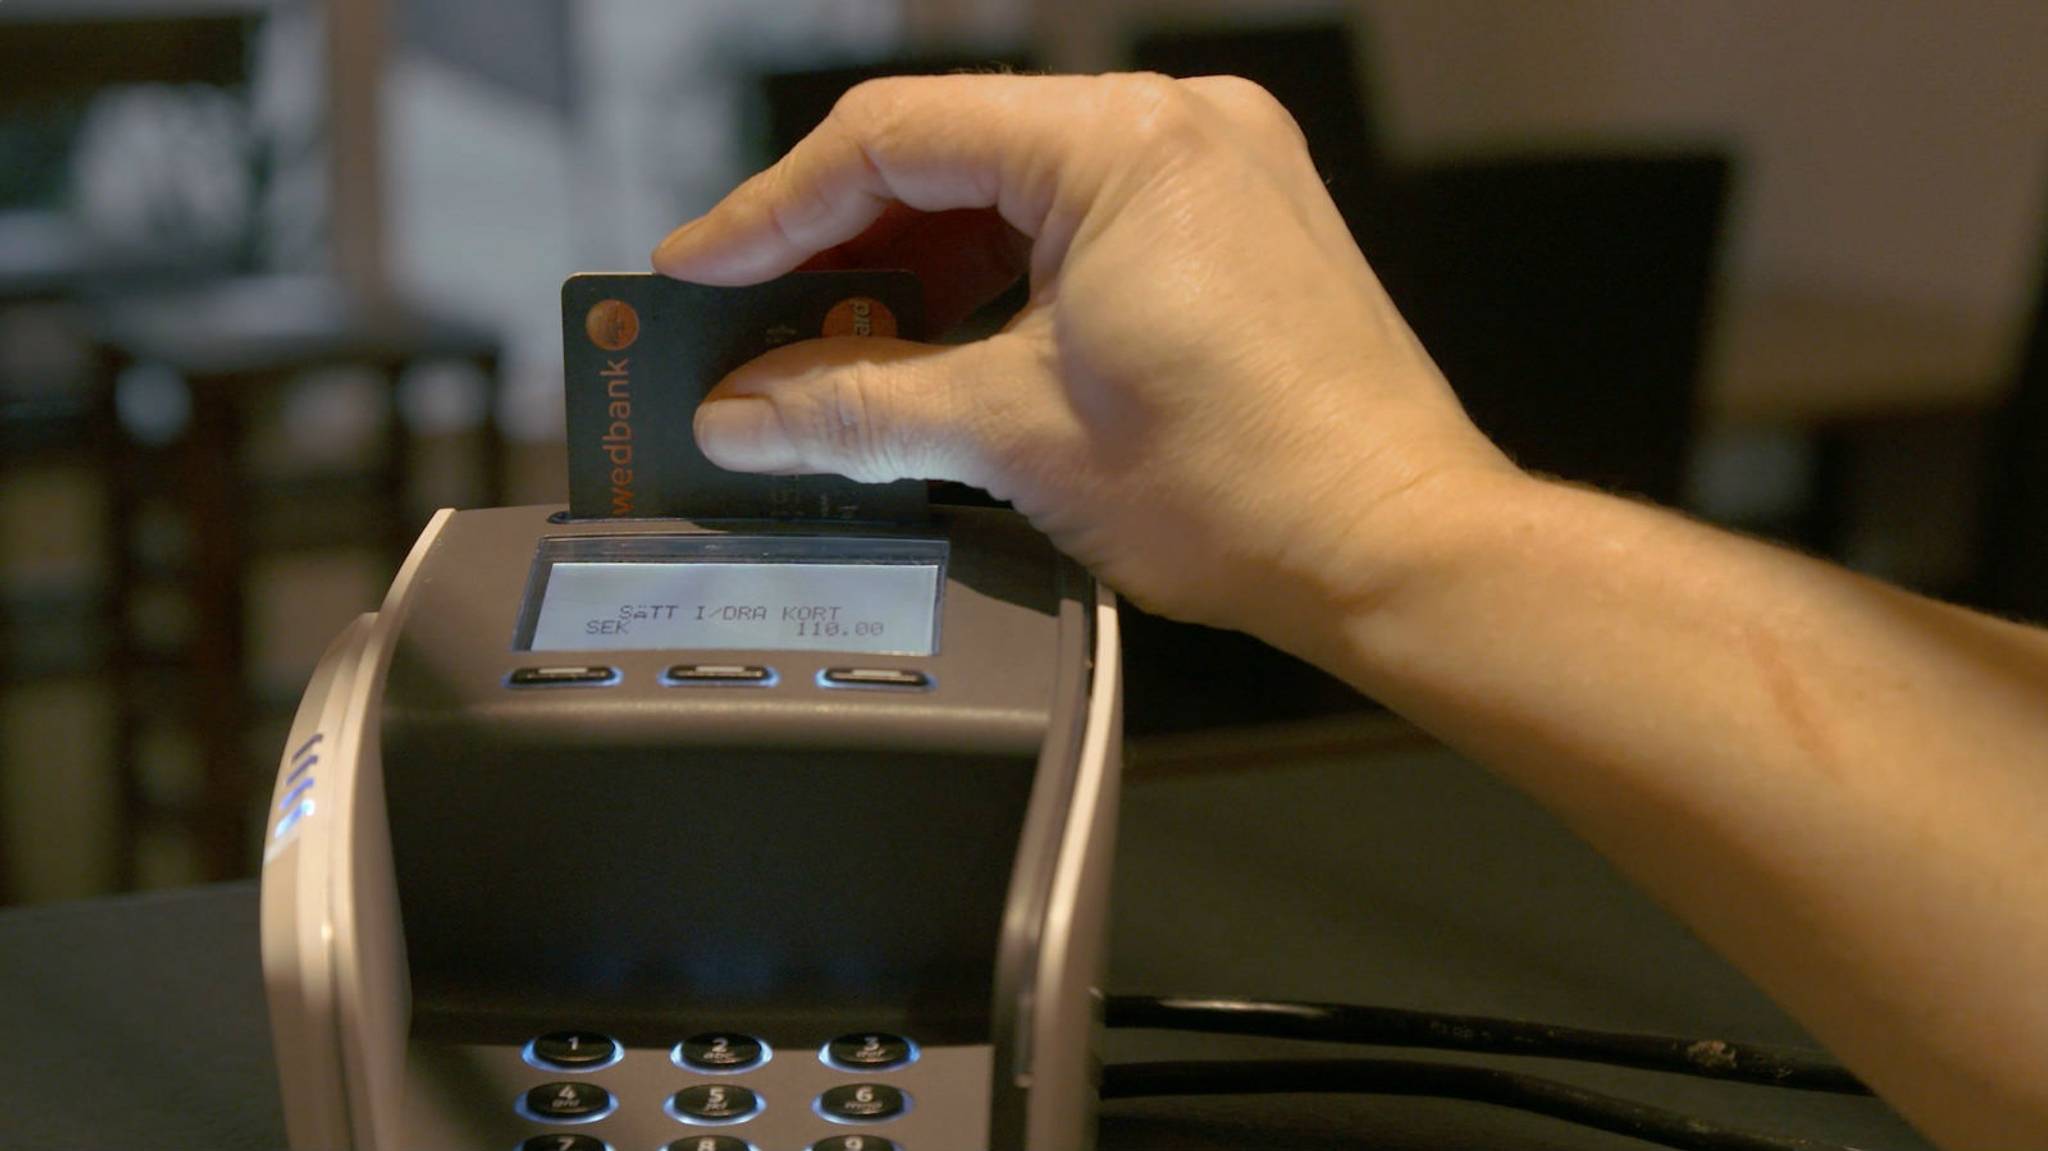 MasterCard introduces fingerprint sensors